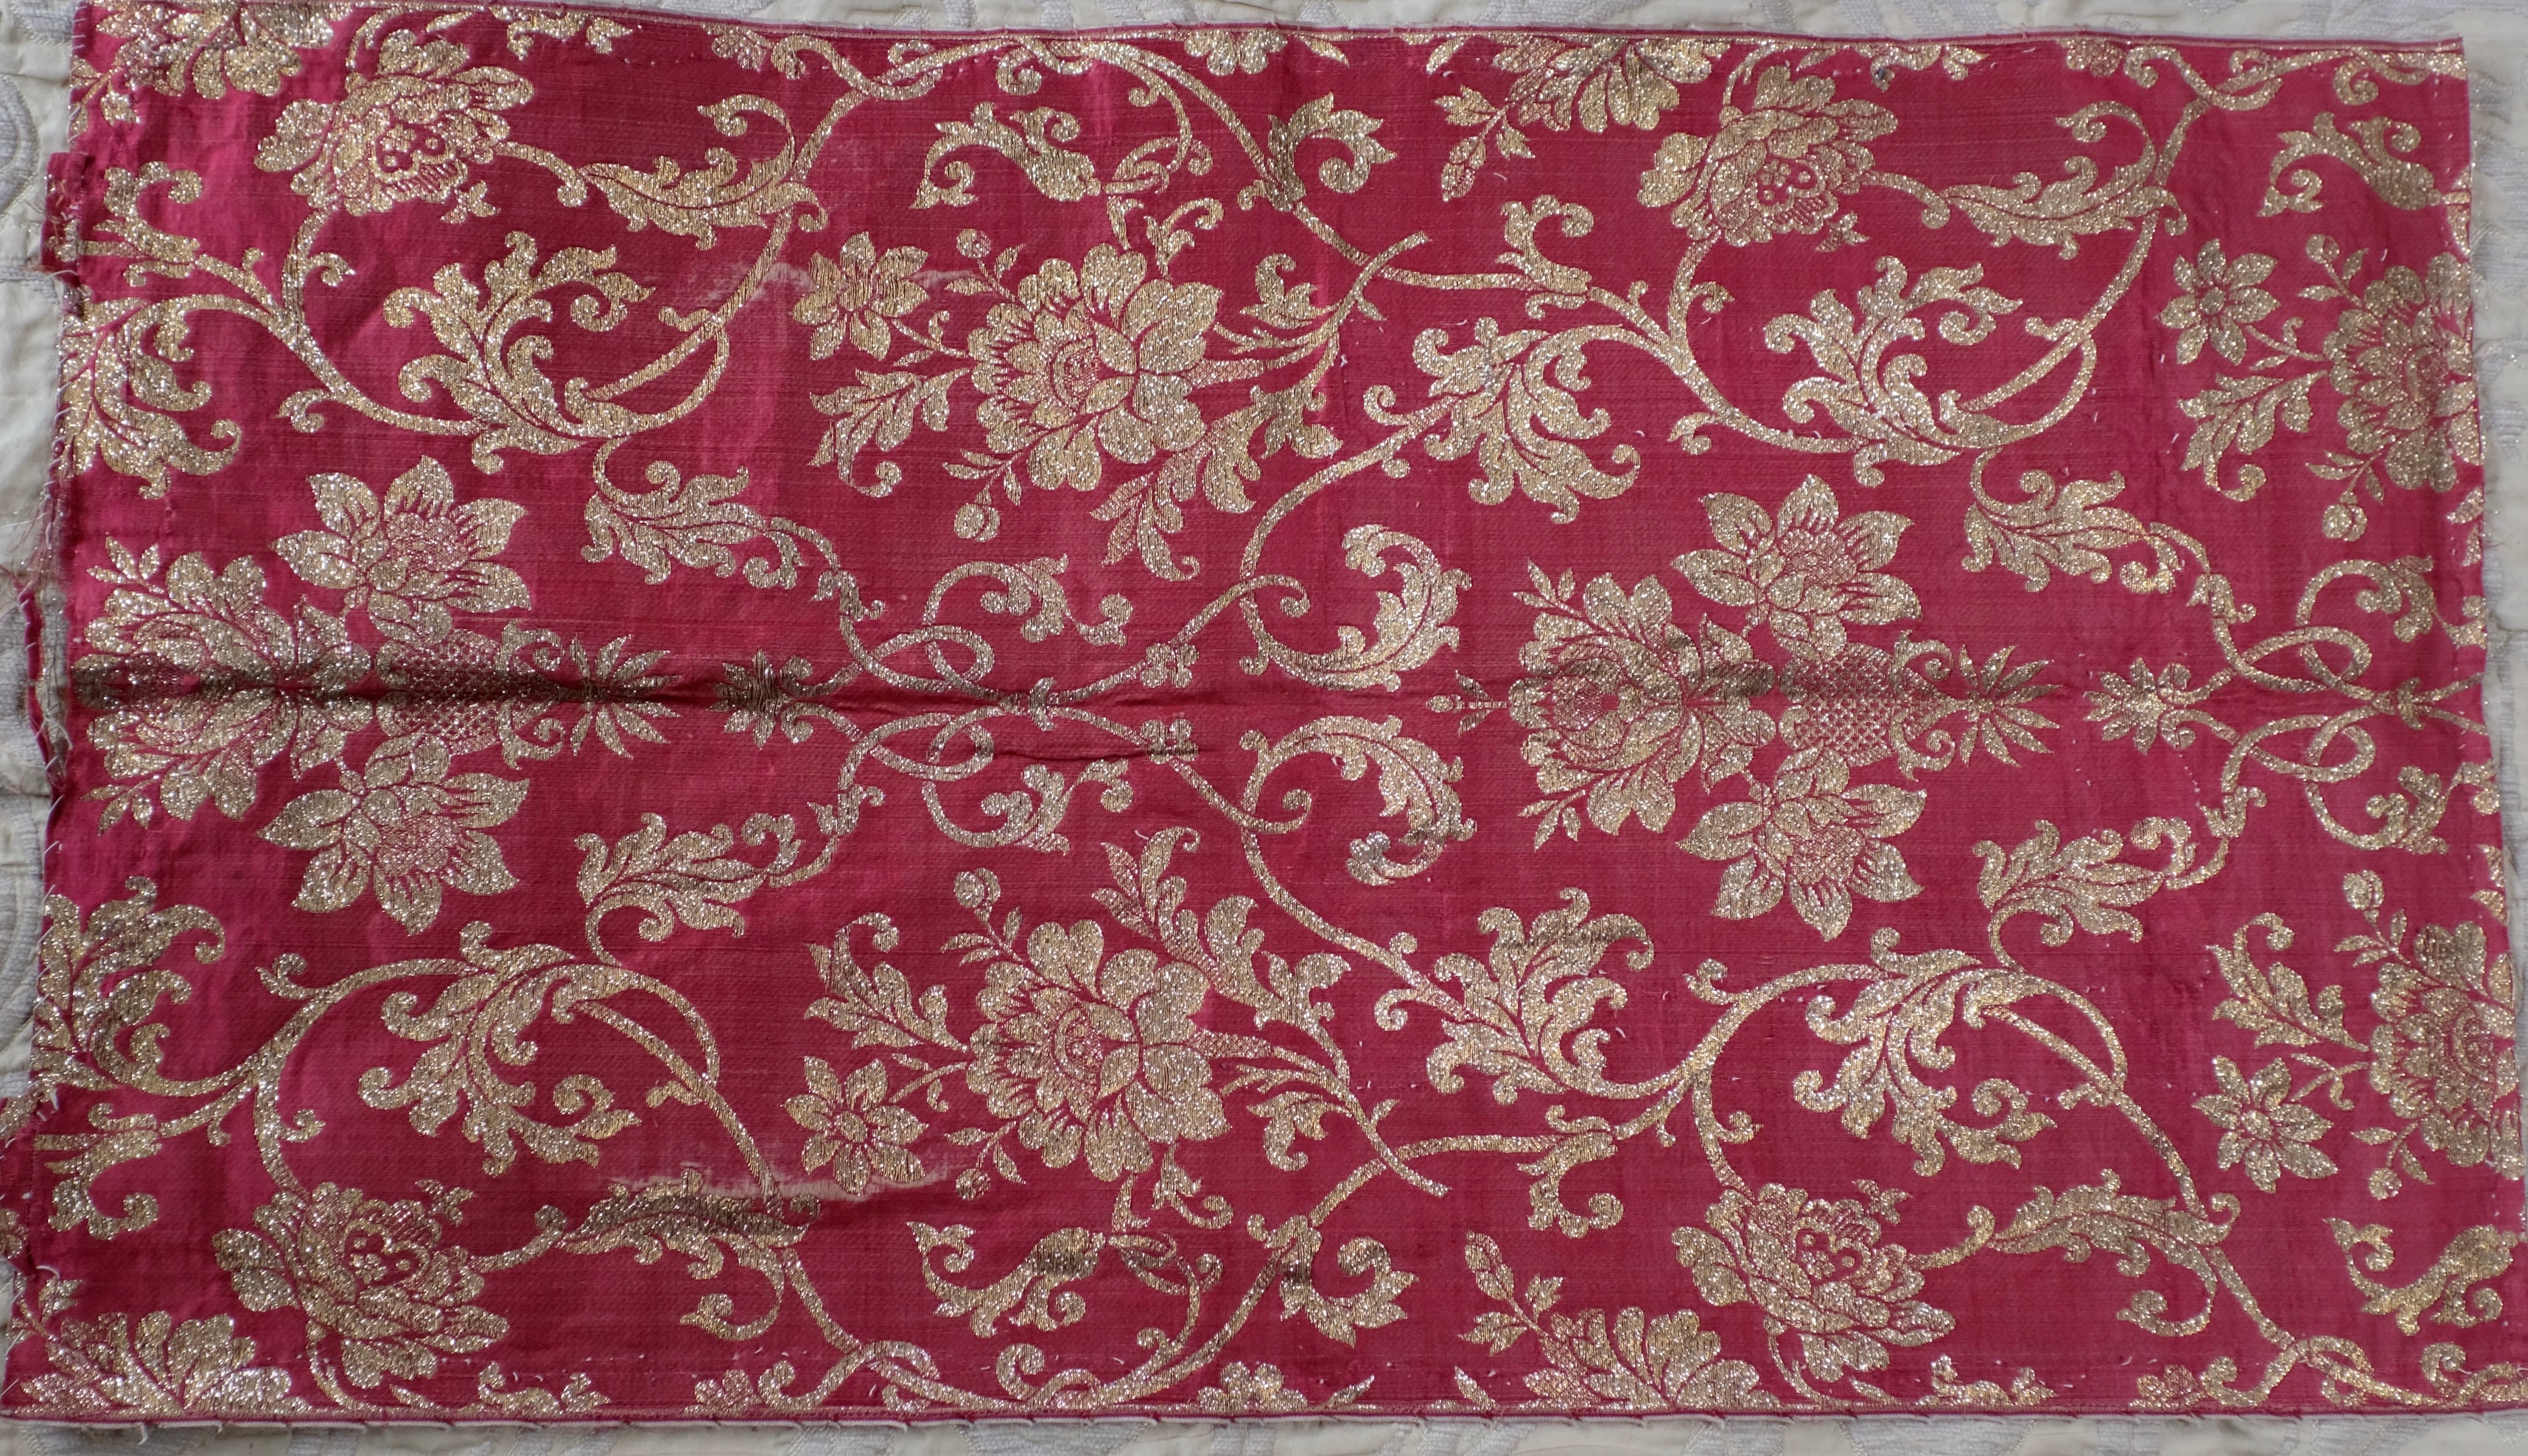 File:18th century silk brocade stays or corset MTIB 103.876.jpg - Wikipedia